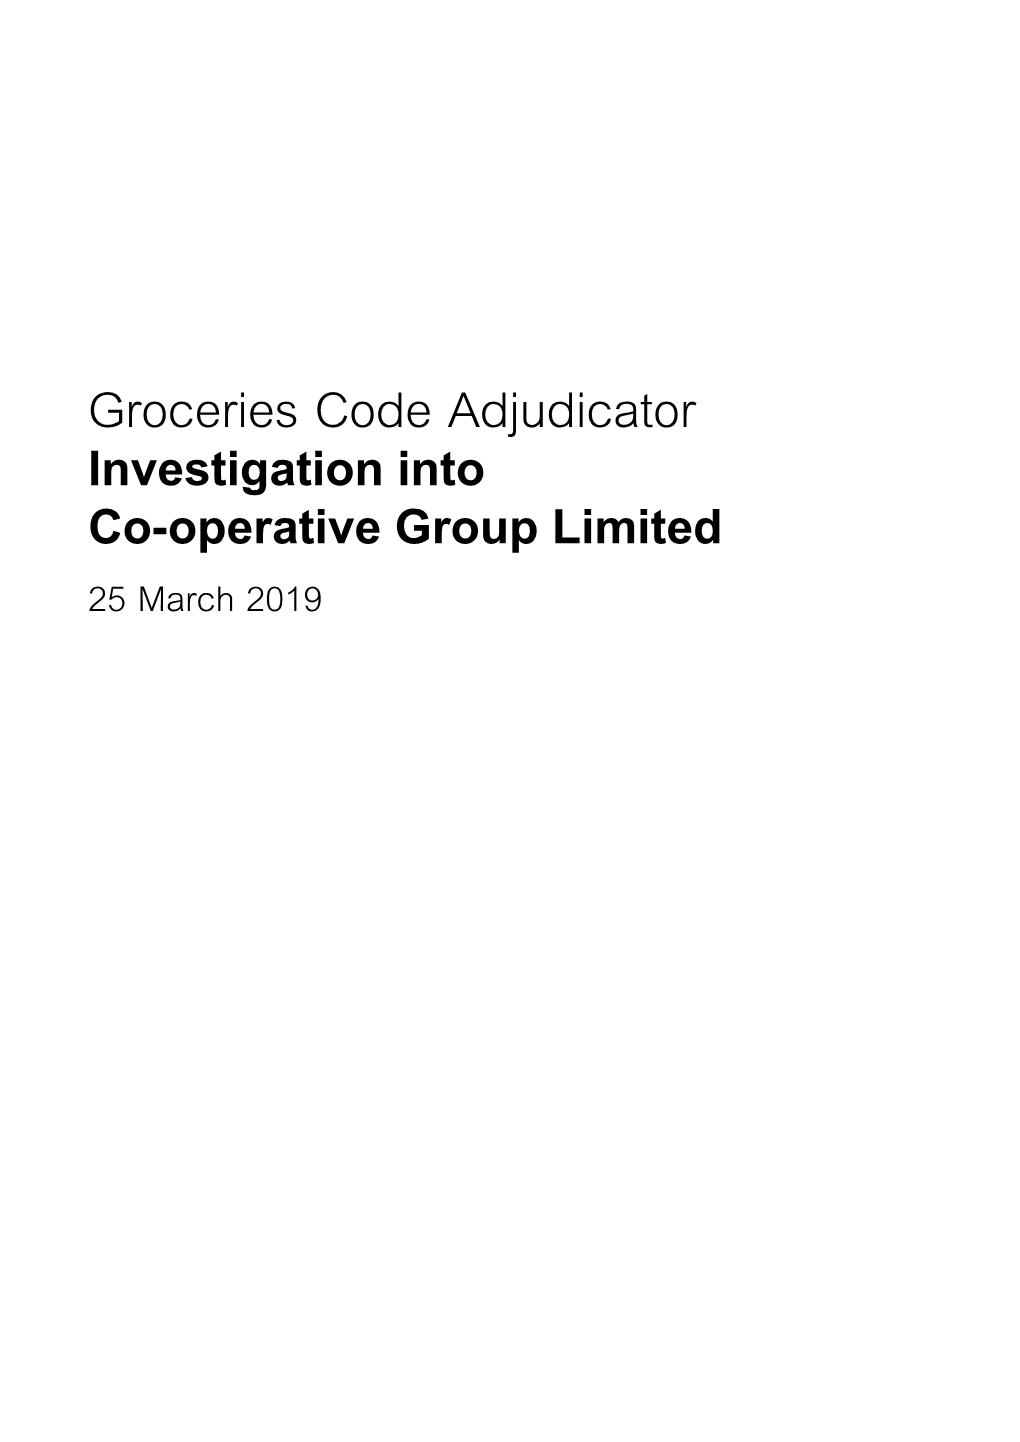 Groceries Code Adjudicator Investigation Into Co-Operative